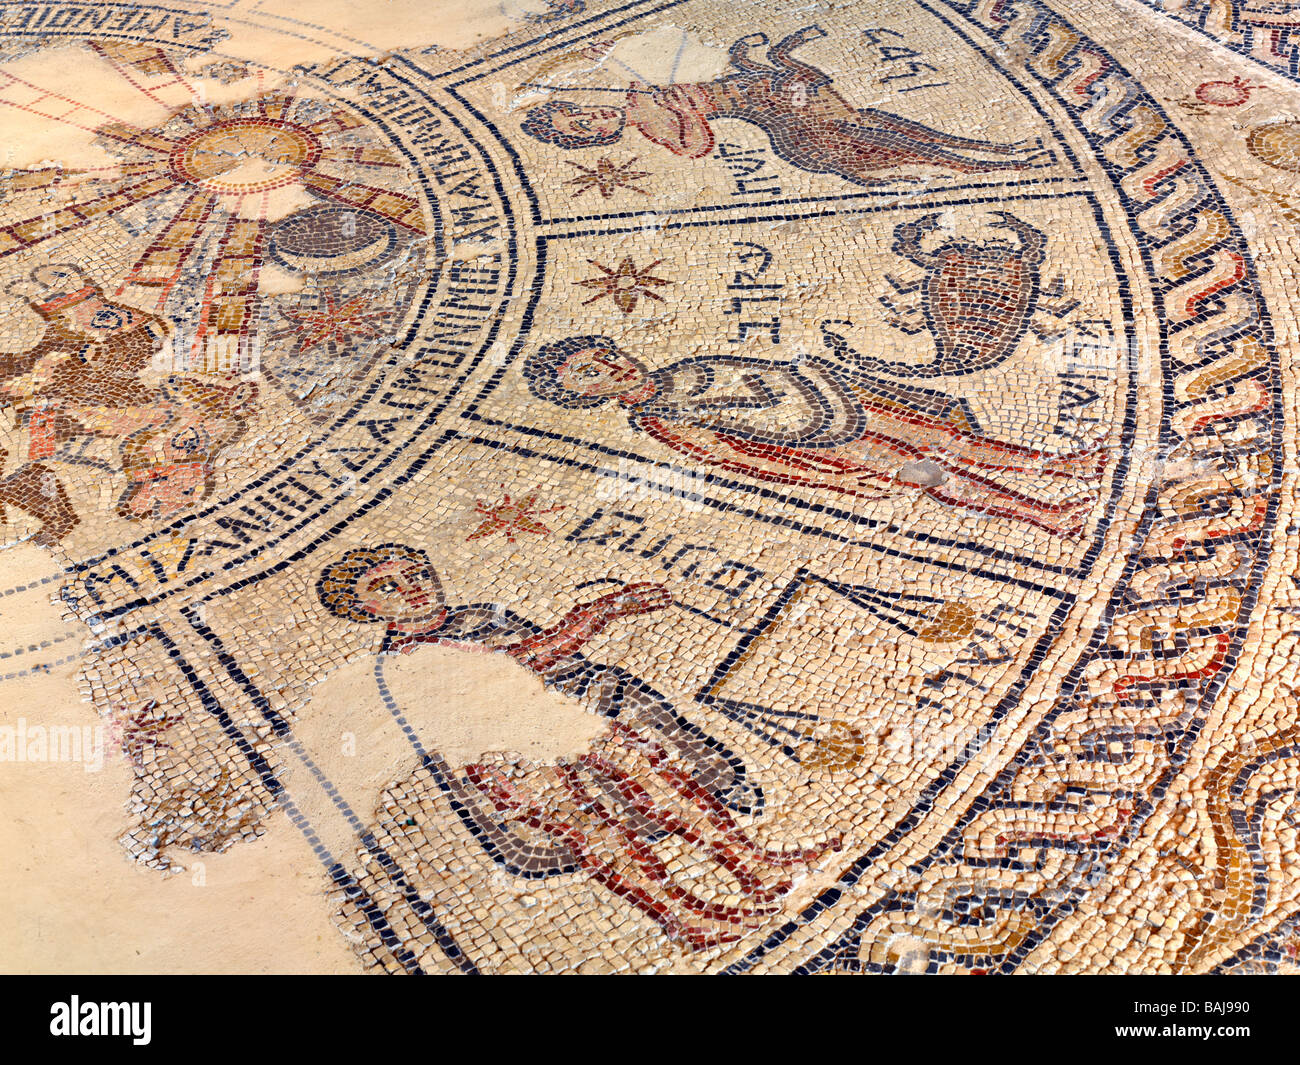 Israel, Zippori, Roman Villa mosaic floors Stock Photo